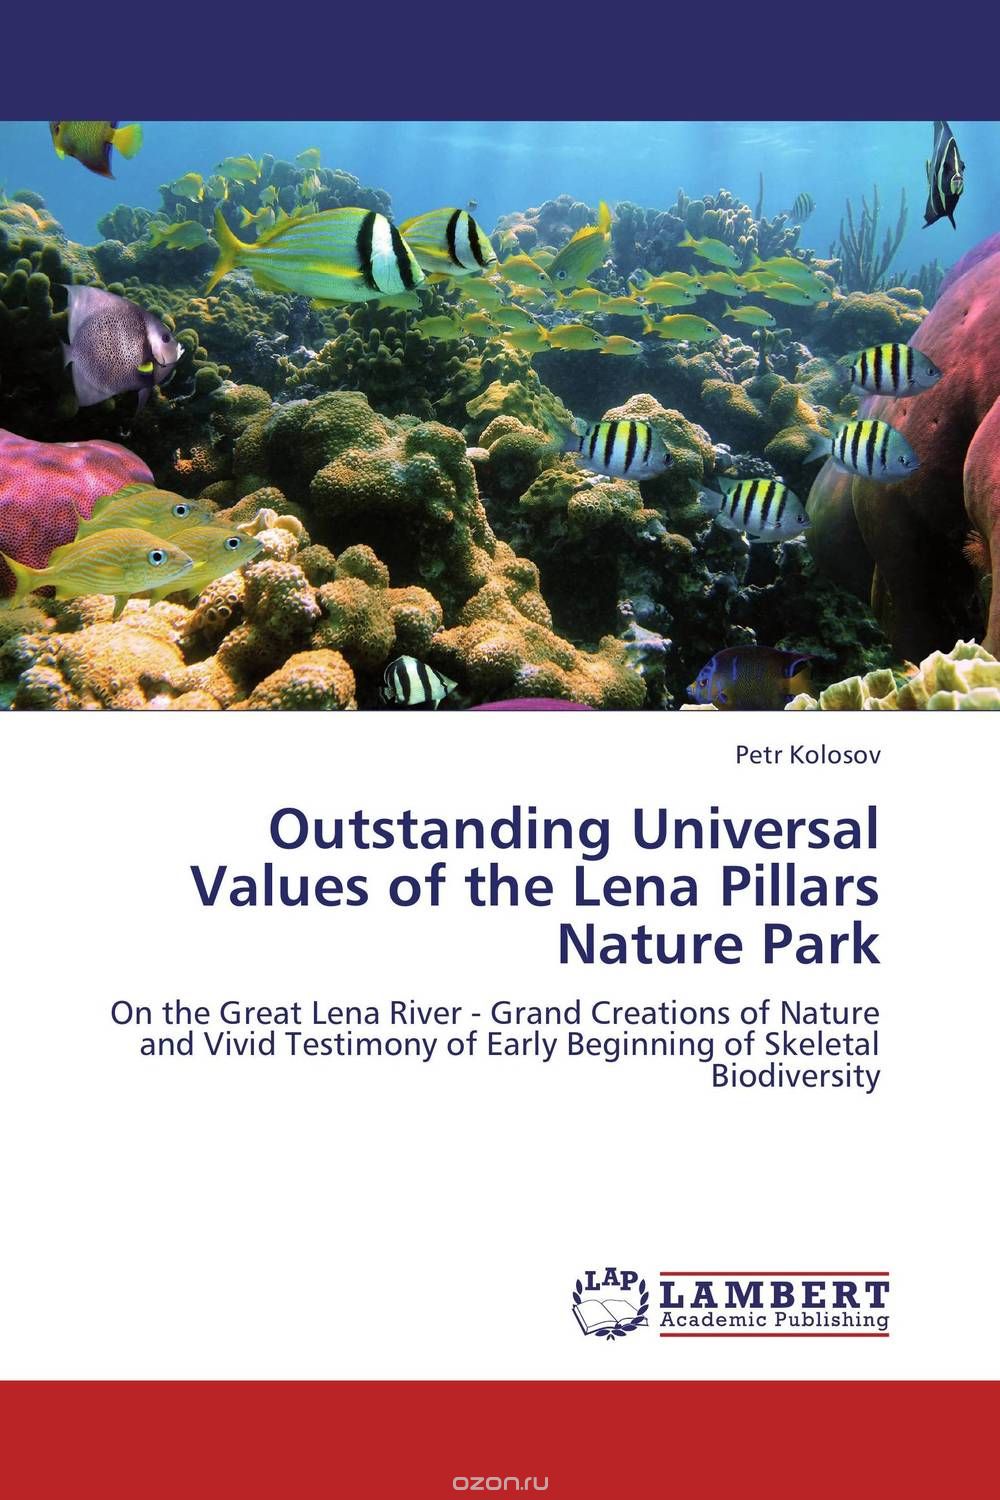 Скачать книгу "Outstanding Universal Values of the Lena Pillars Nature Park"